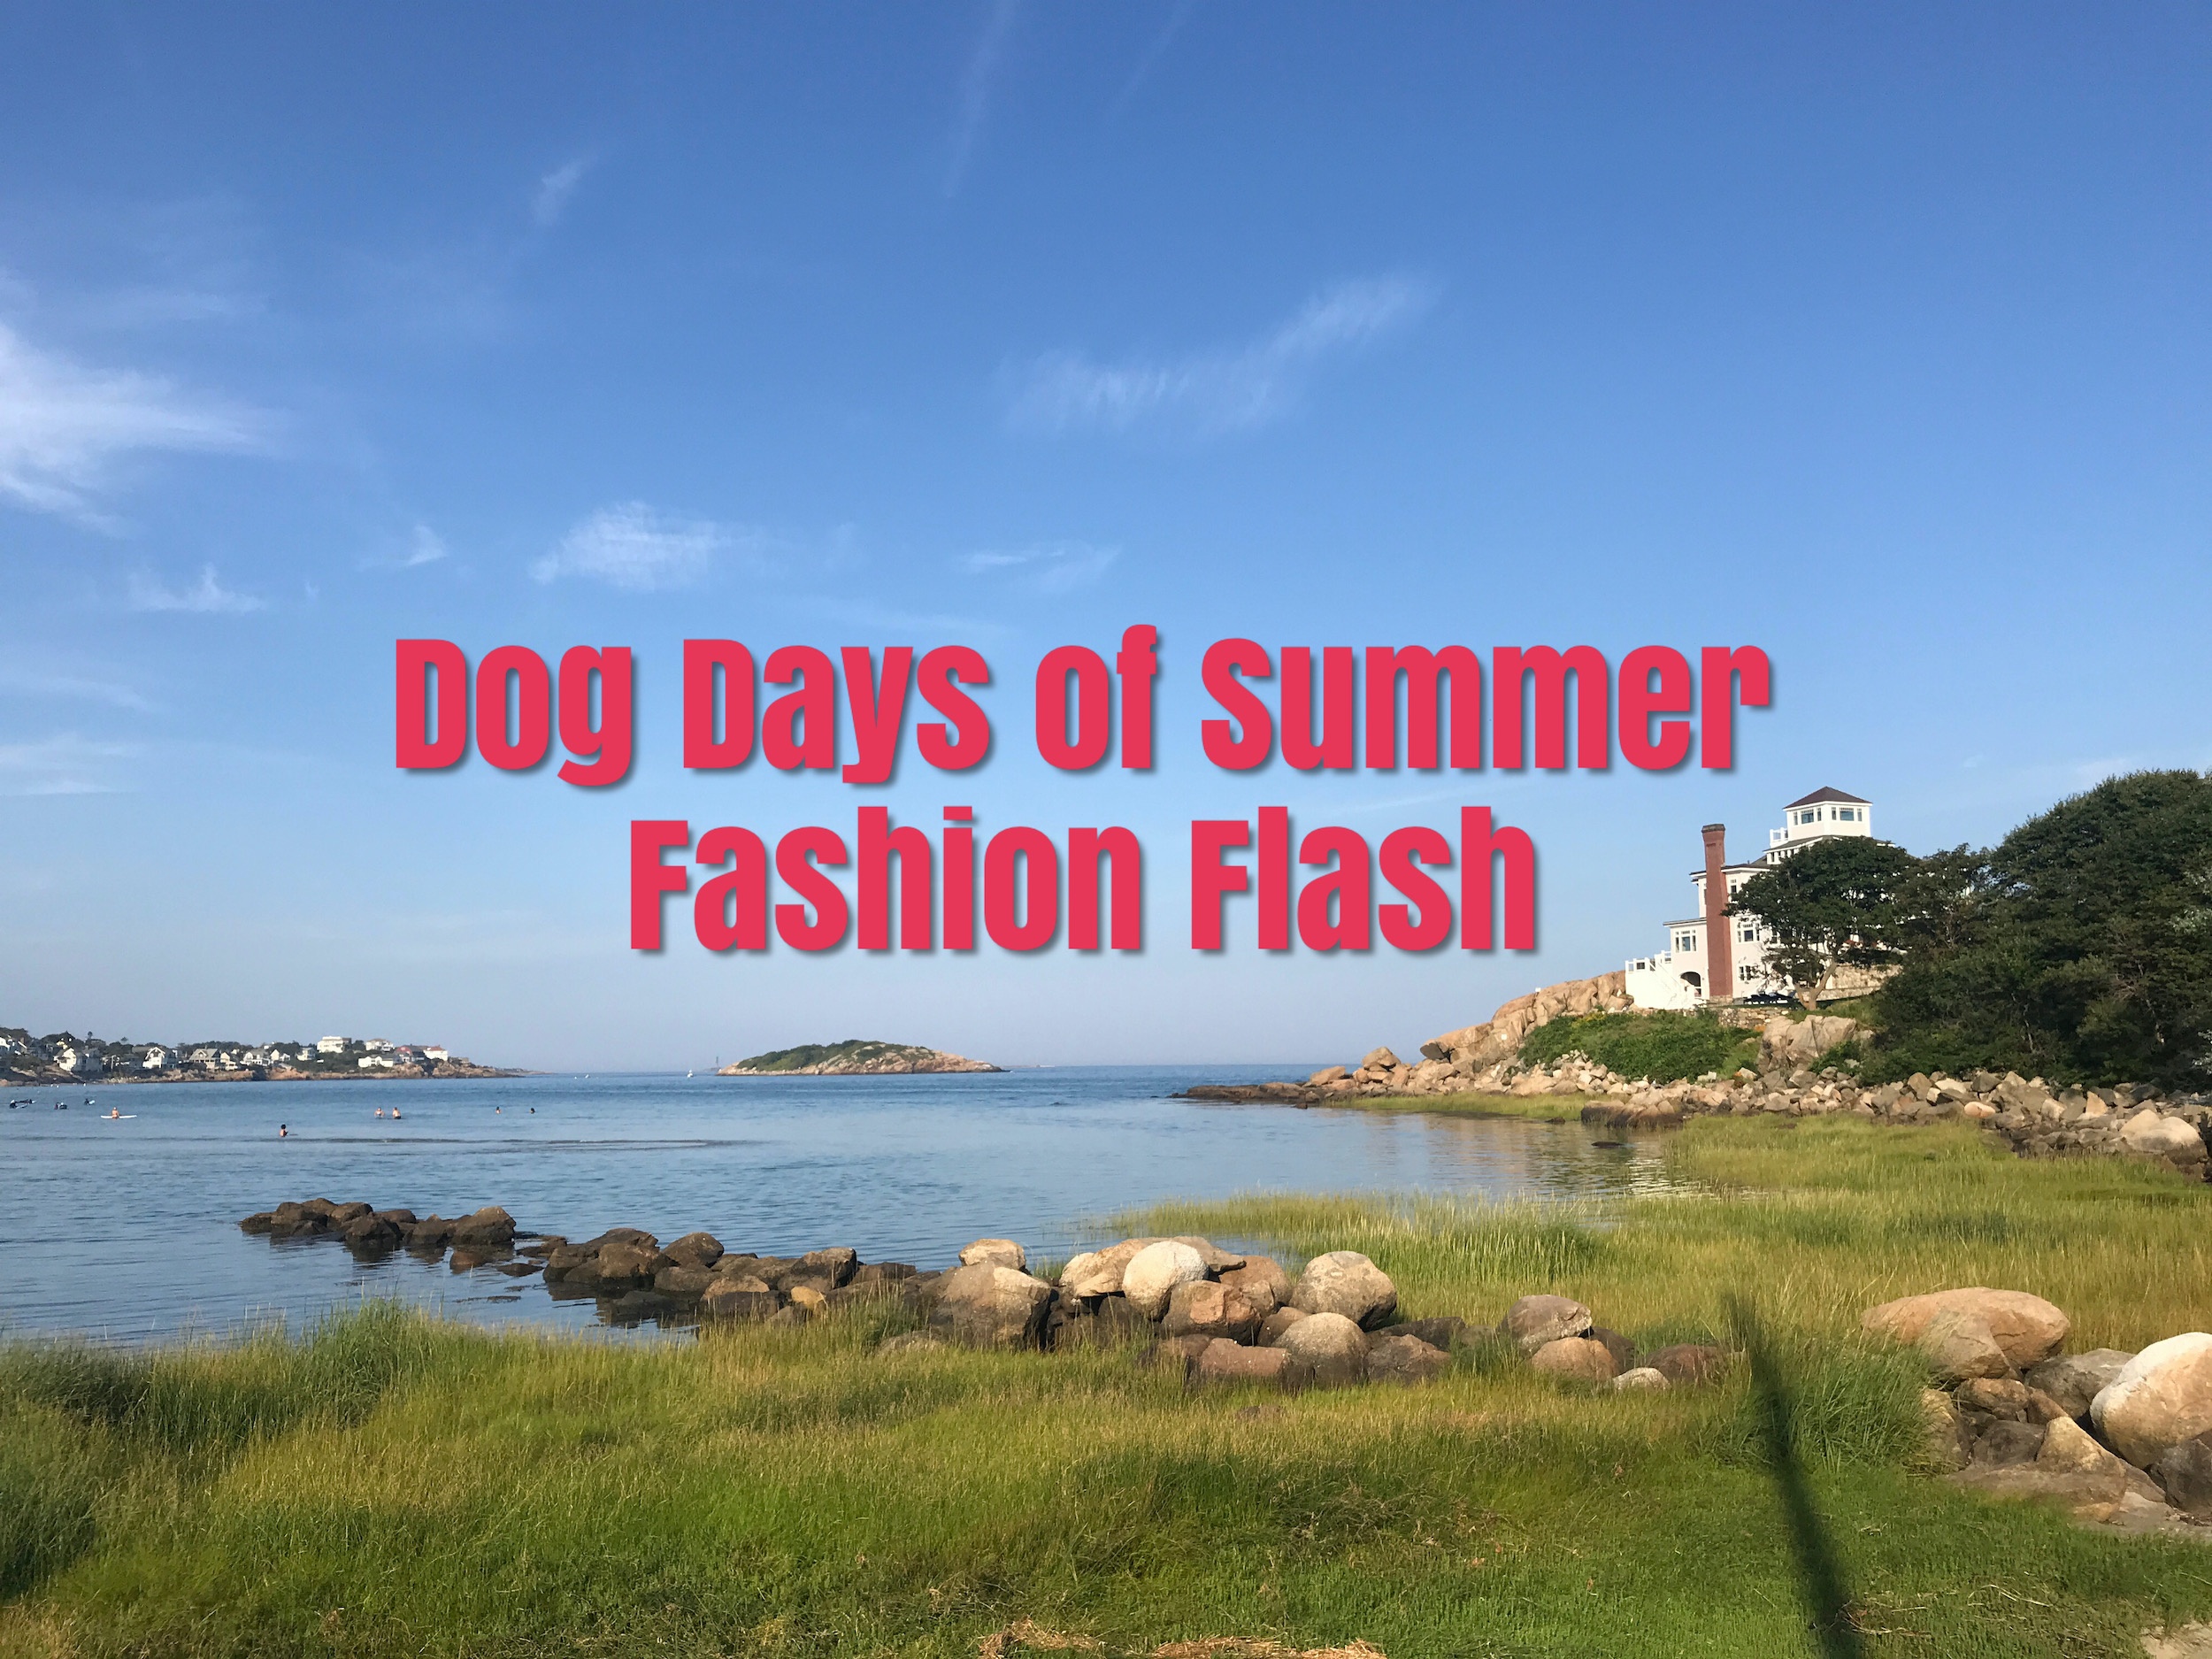 Dog Days of Summer Fashion Flash at Good Harbor Beach